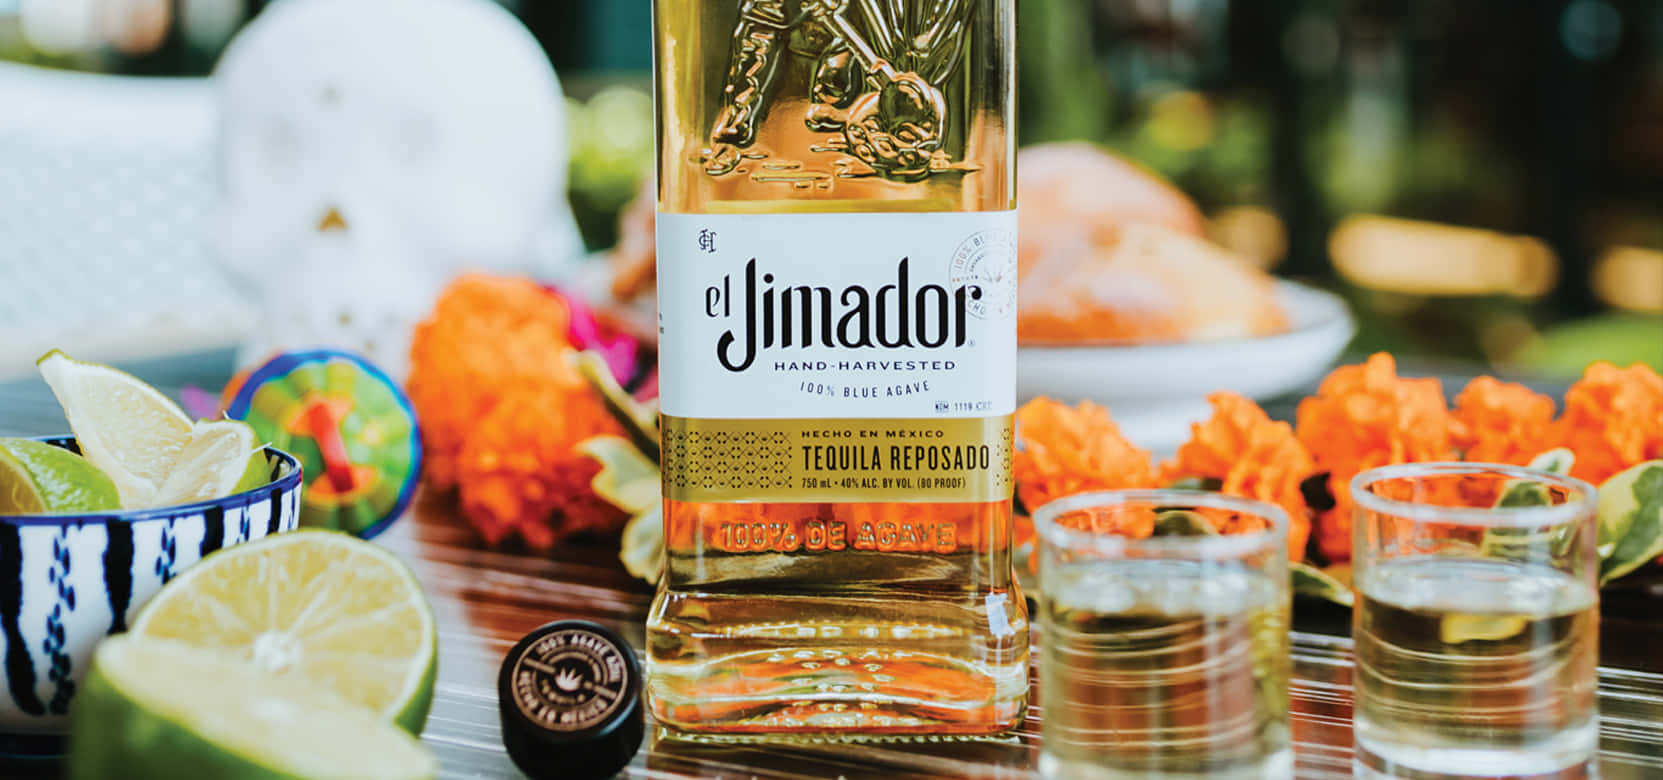 A masterful close-up shot of El Jimador Reposado's tequila bottle. Wallpaper